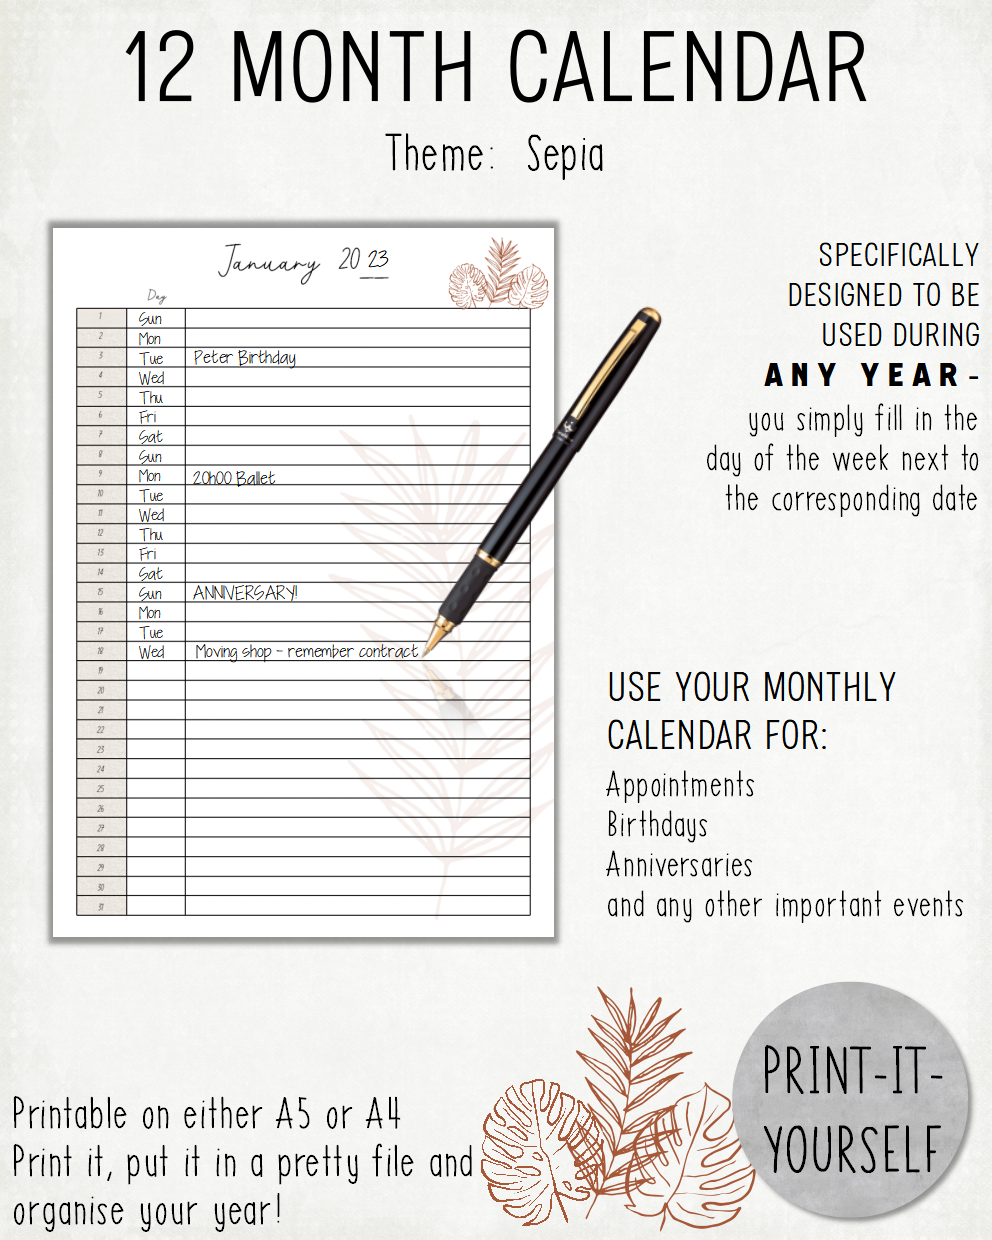 READY TO PRINT:  12 Month Calendar - Sepia